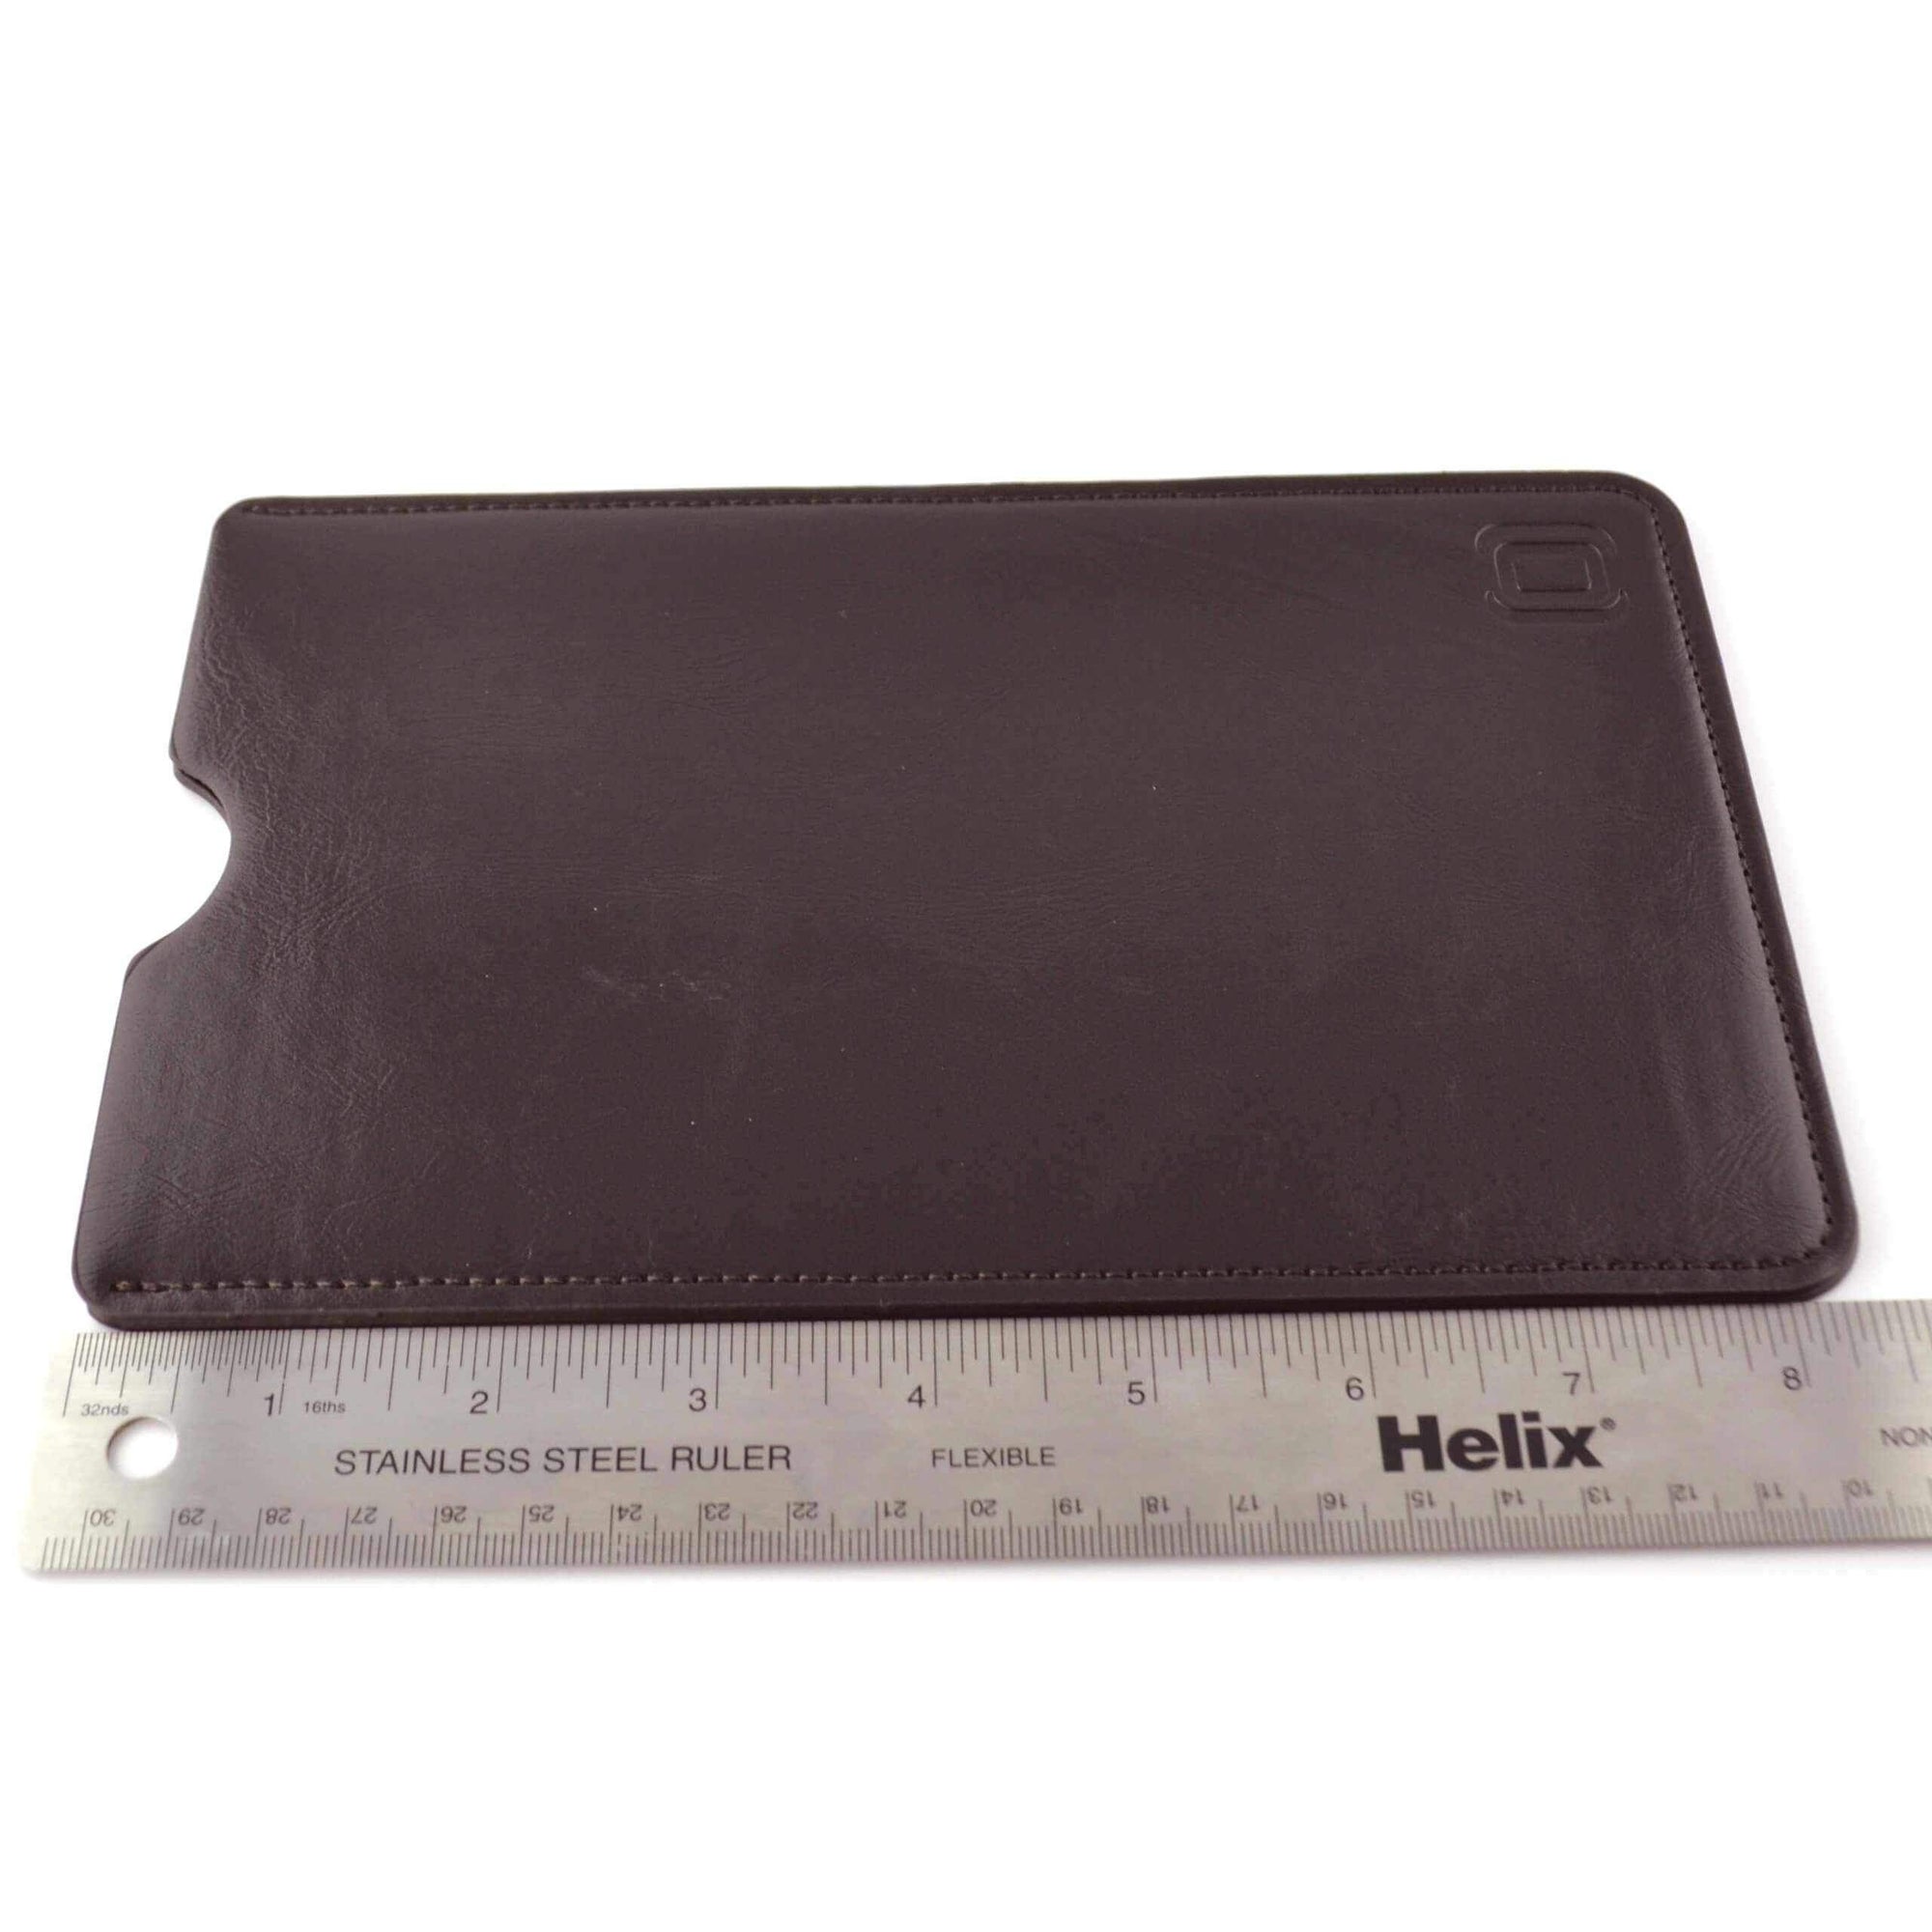 Executive Sleeve - Premium Synthetic Leather with Microfiber Lining - Nexus 7/9 Google Tablet Sleeve Dockem 